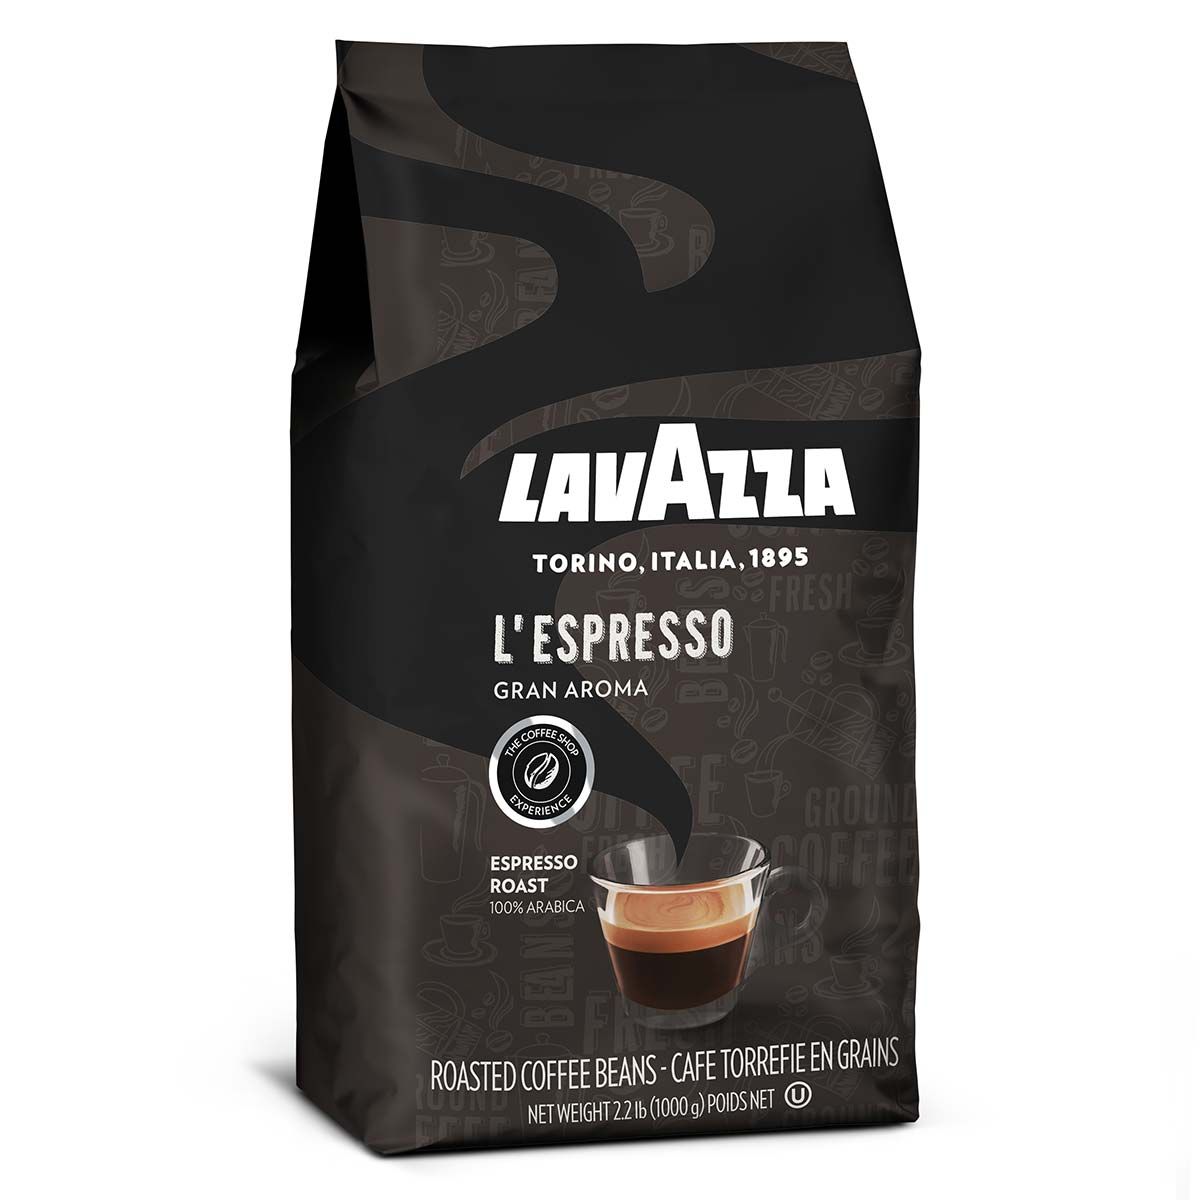 LavAzza Gran Aroma - ESPRESSO - Grain de Café sélectionné SelectCaffè